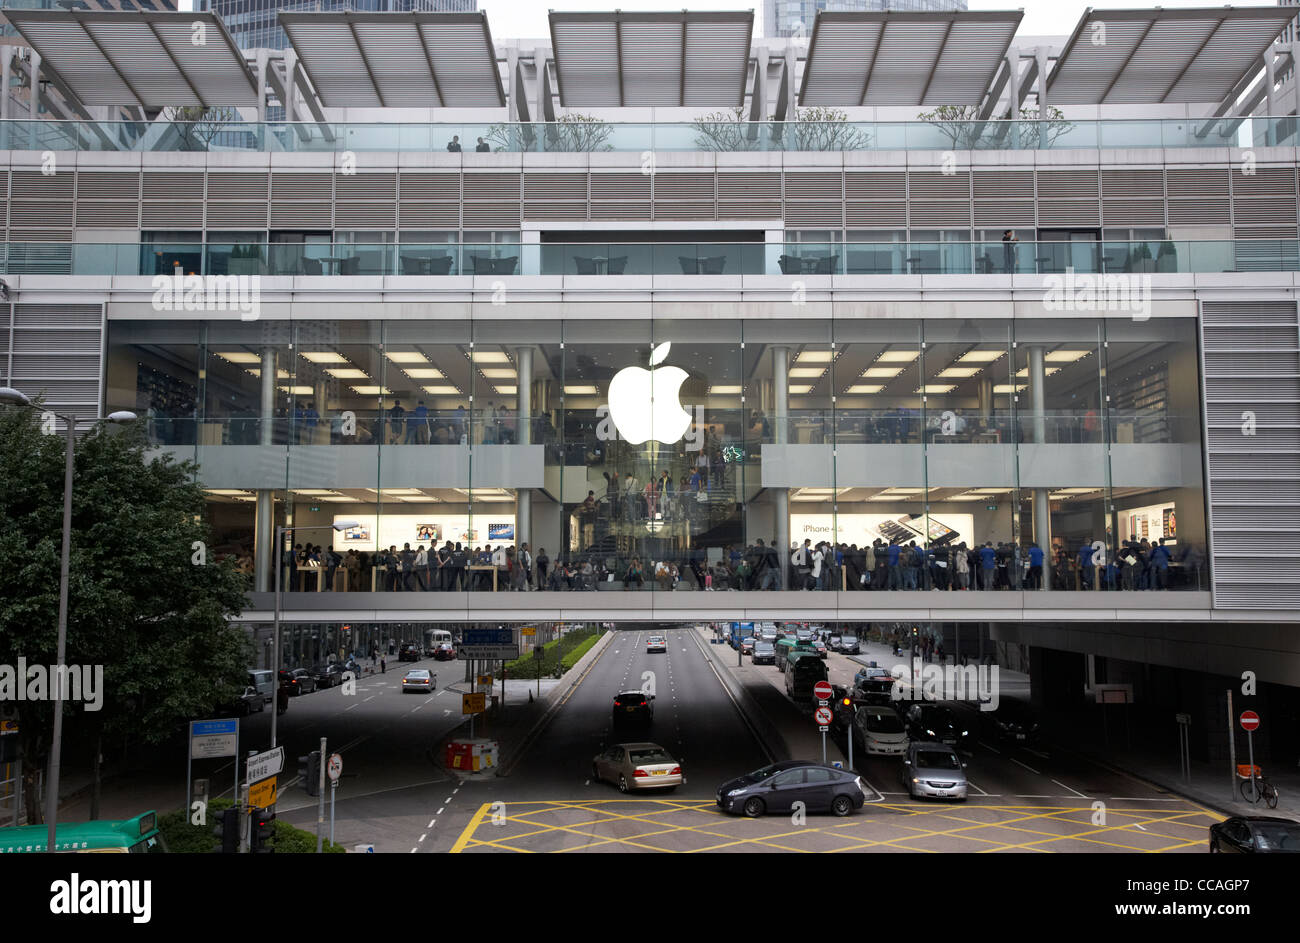 im Apple Store in der Ifc Mall in Hongkong Sonderverwaltungsregion Hongkong China Zentralasien Stockfoto